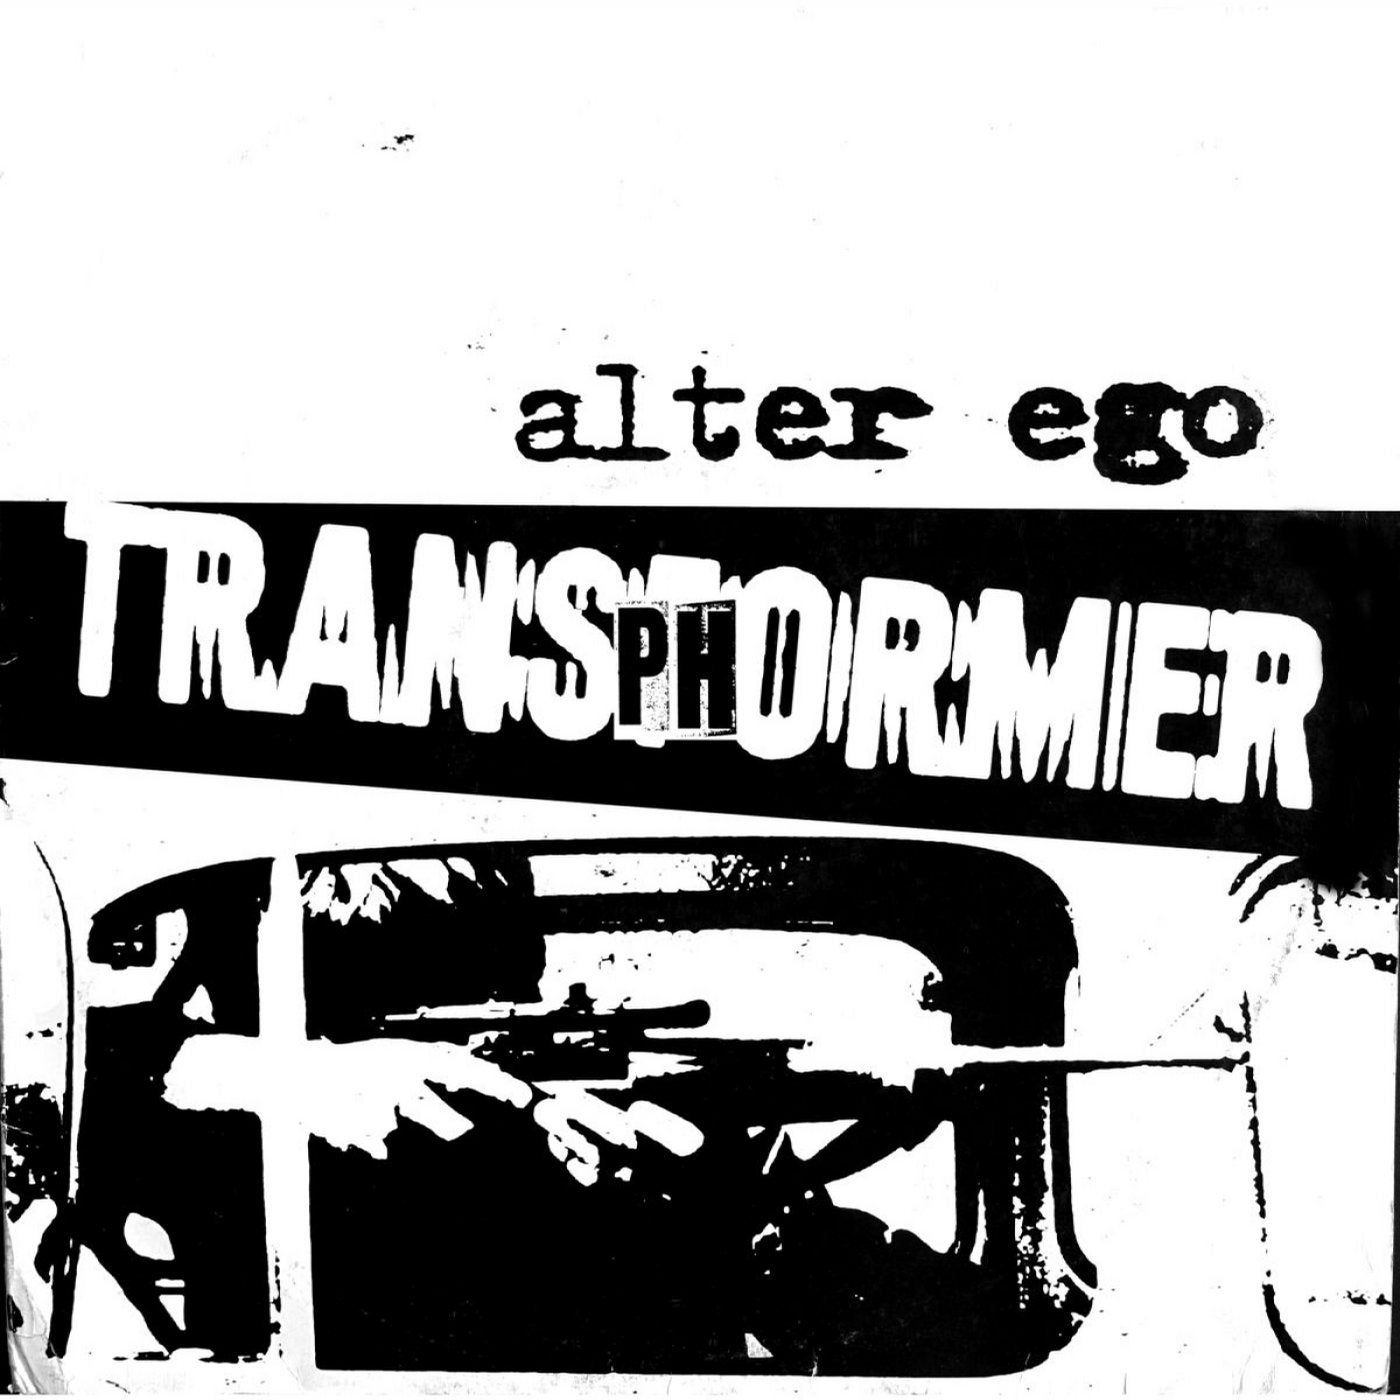 Transphormer